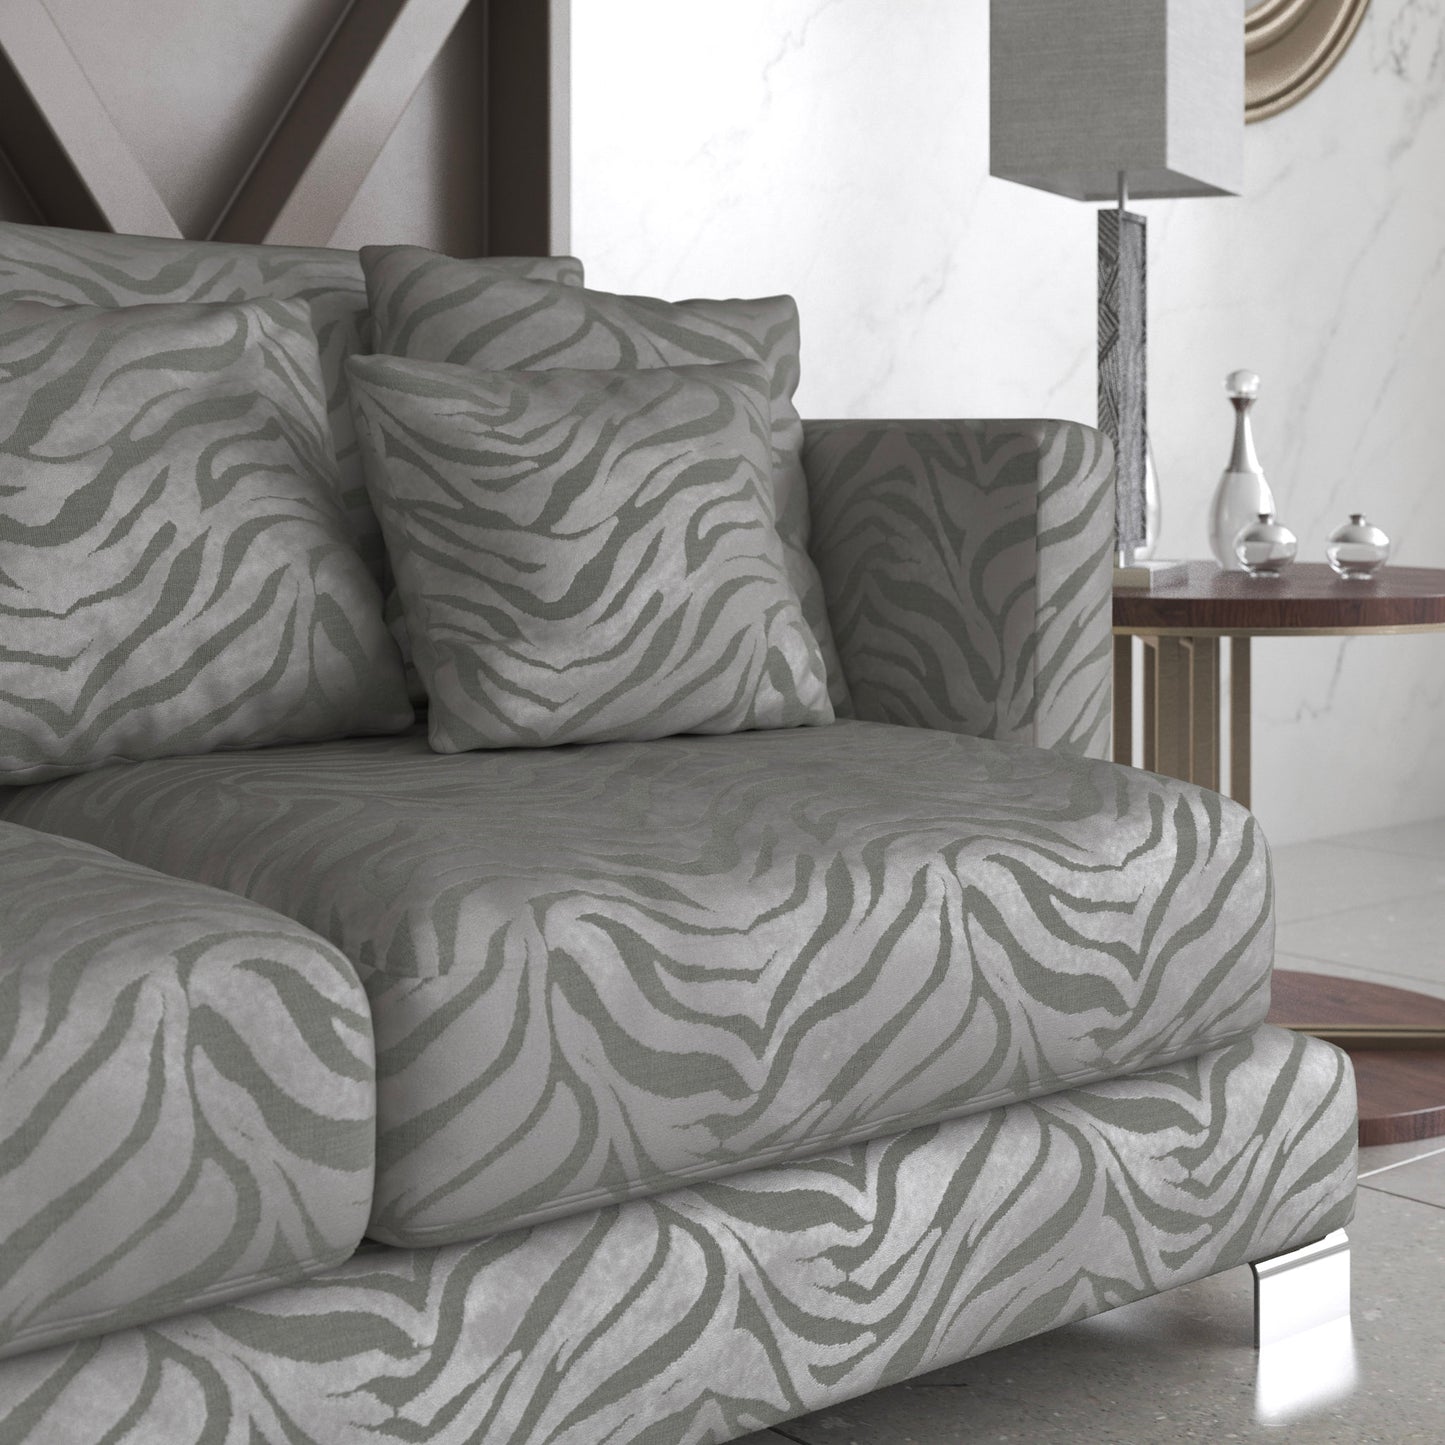 Cebra Fabric - Warwick Fabrics Sauvage Collection